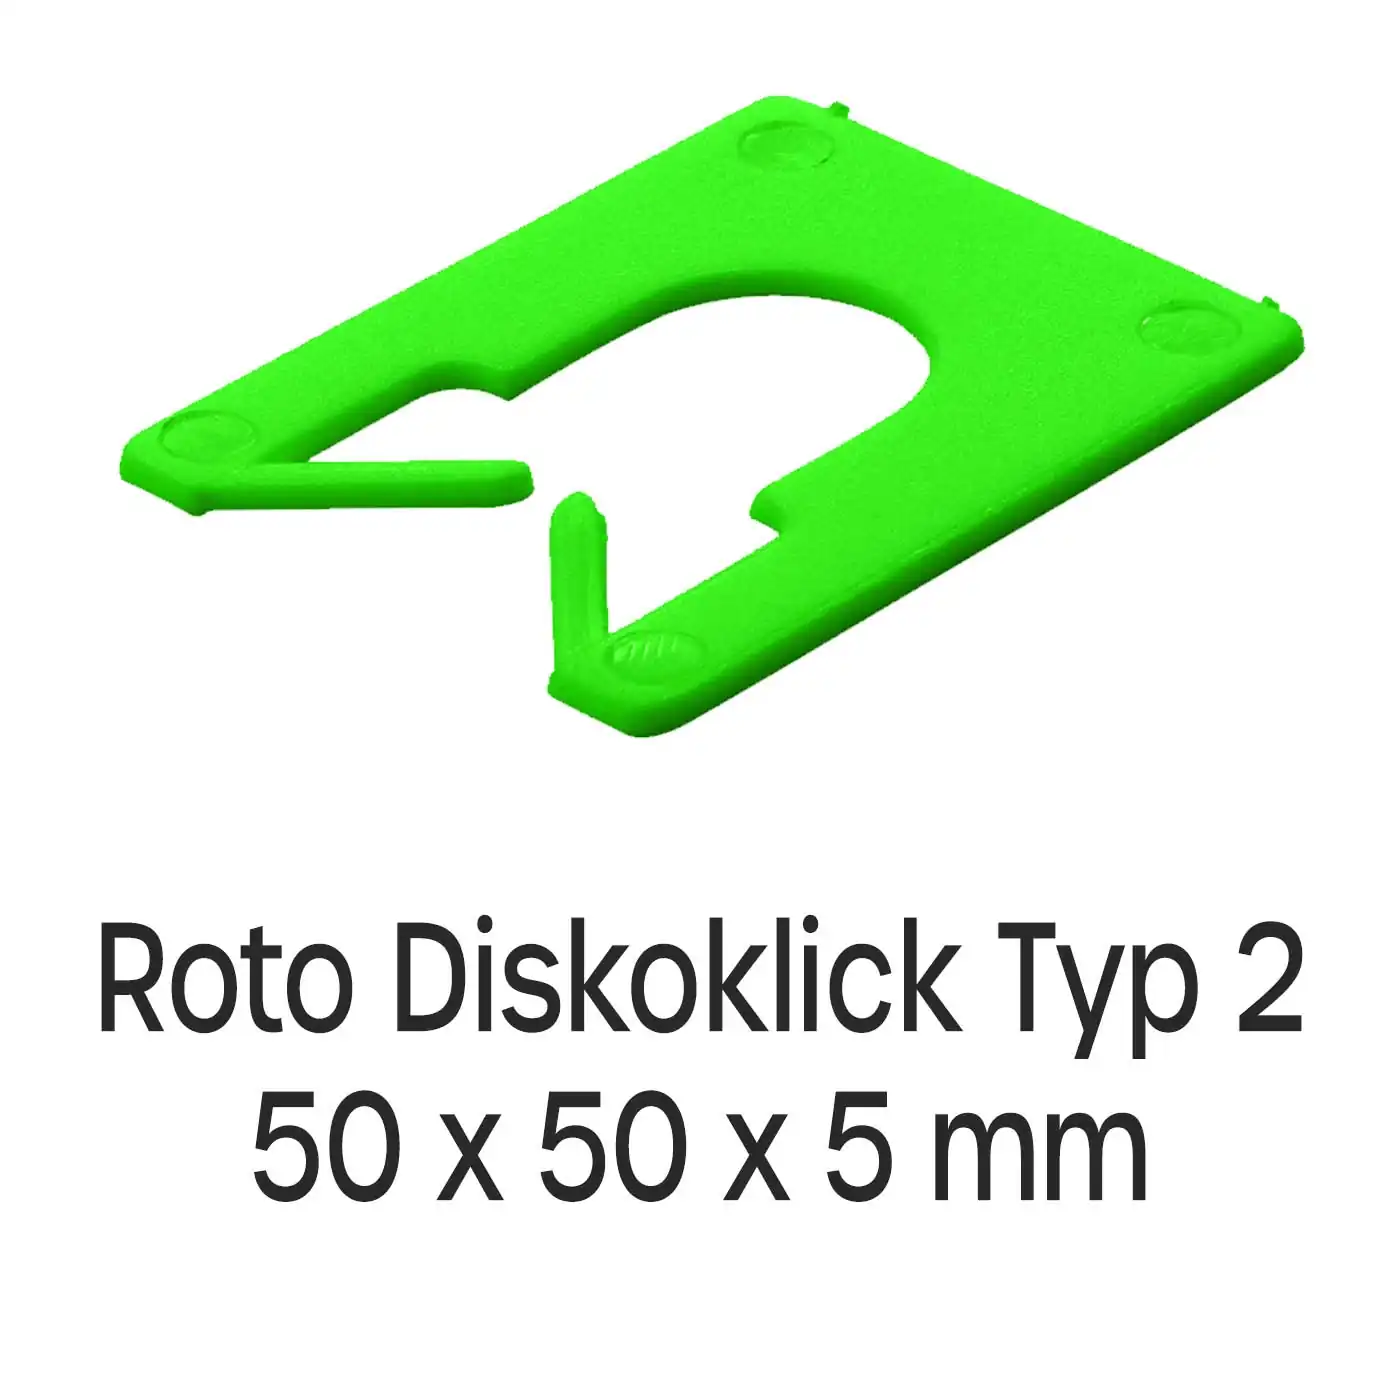 Distanzplatten Roto Diskoklick Typ 2 50 x 50 x 5 mm 1000 Stück